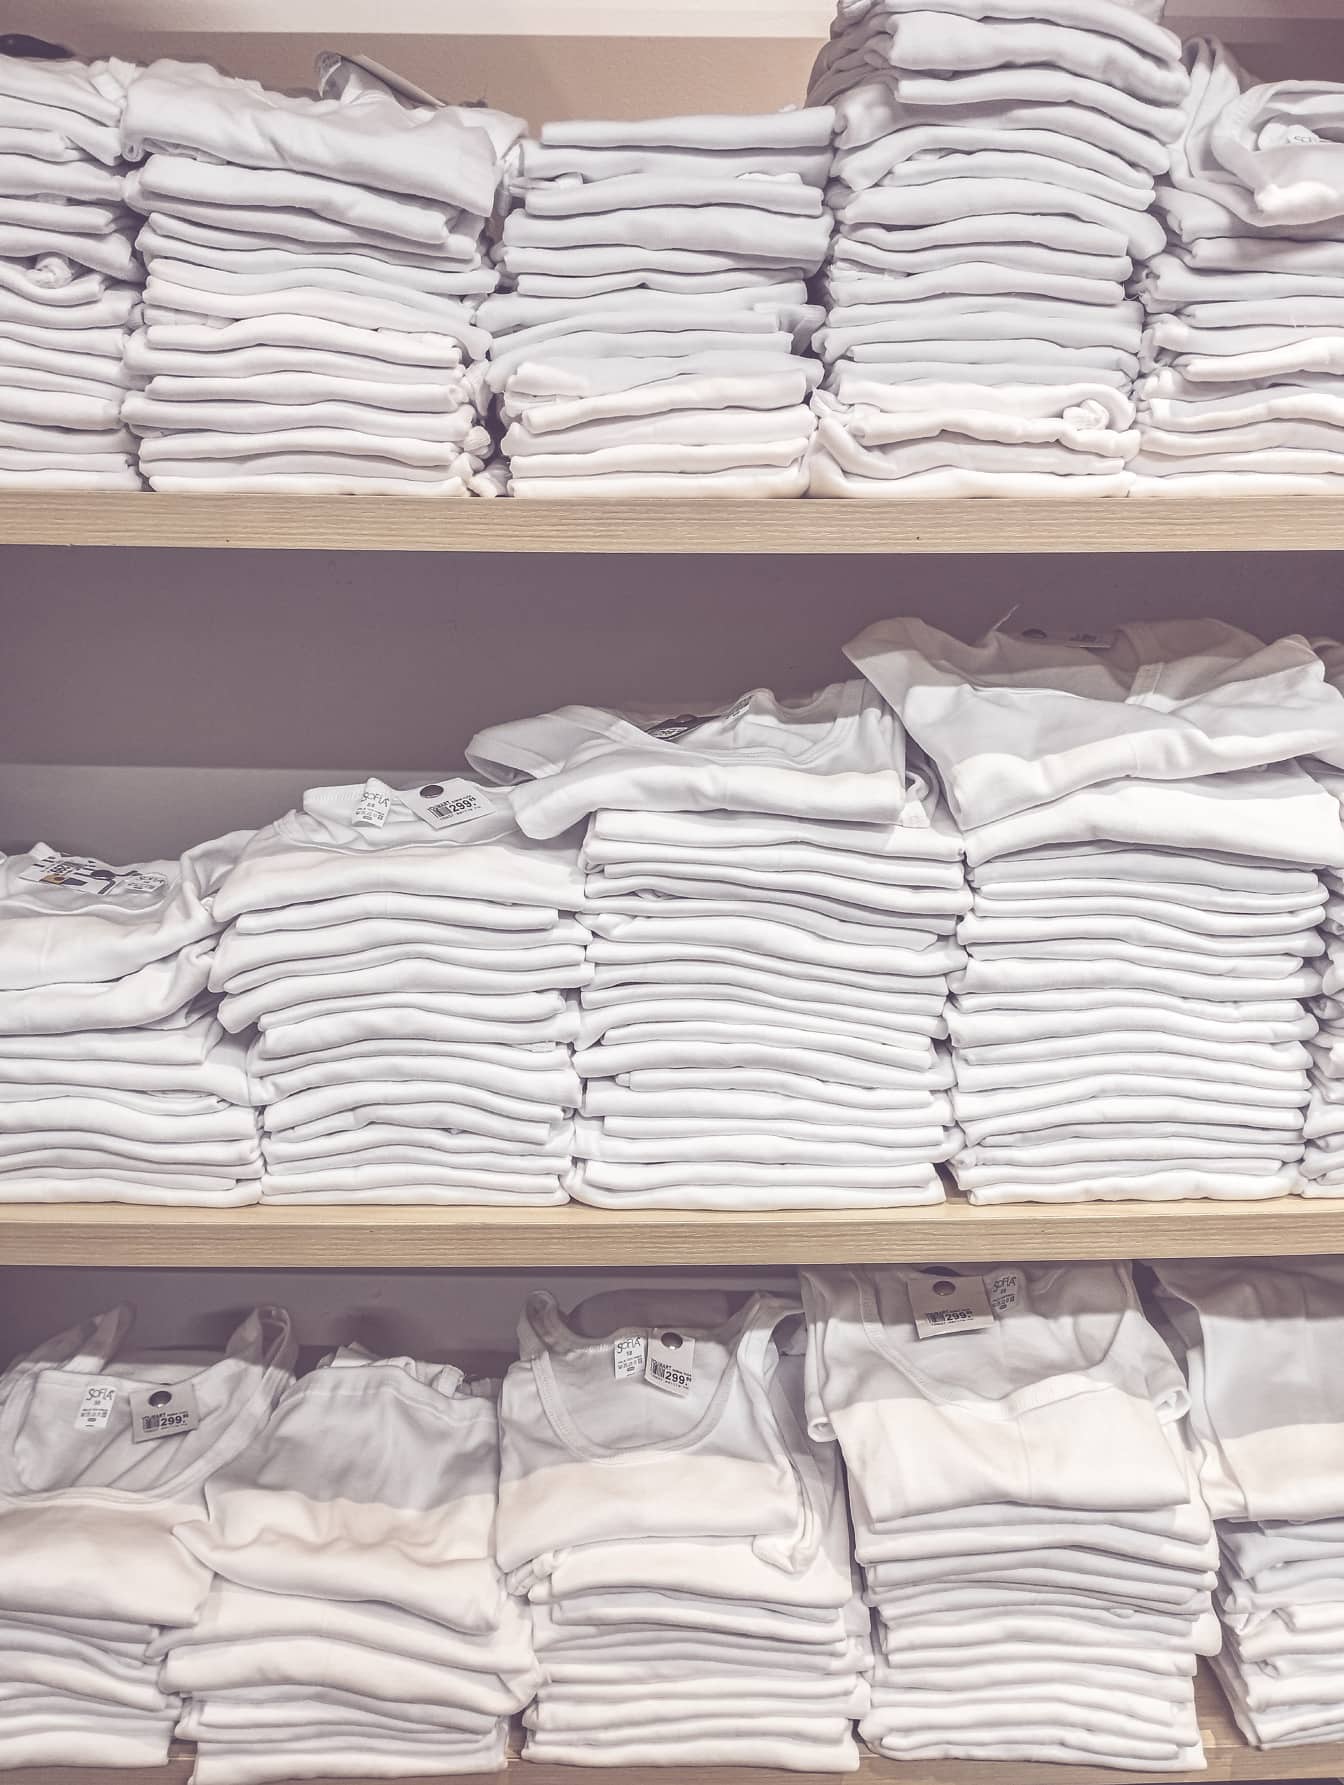 Pure white cotton sweatshirts on shelf in store